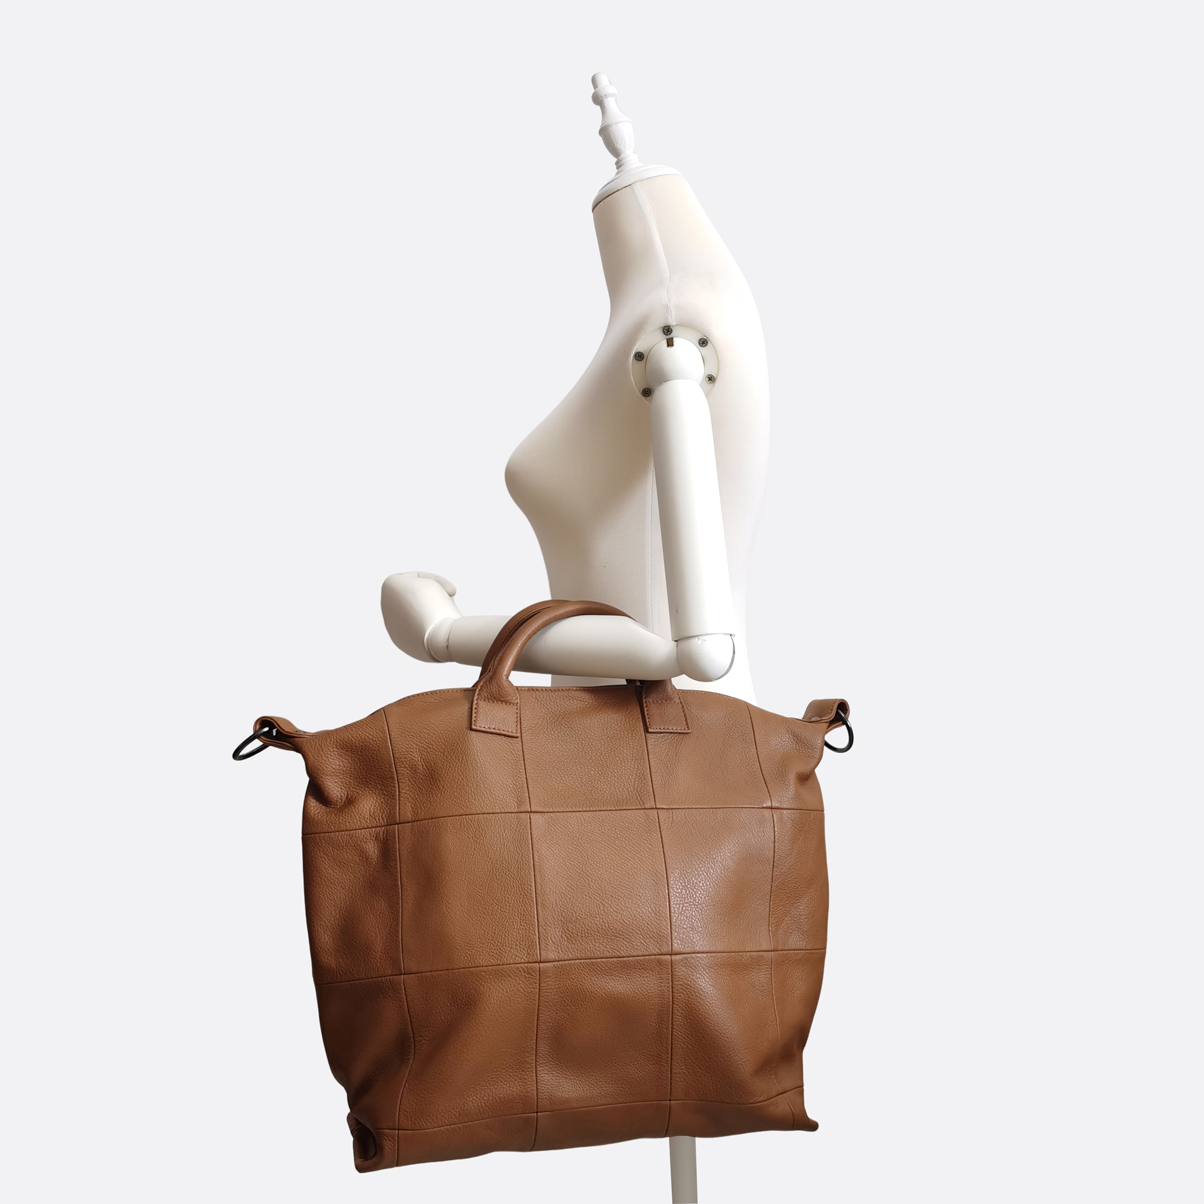 Unisex Men's and Women's genuine cowhide leather handbag Cara V4 design